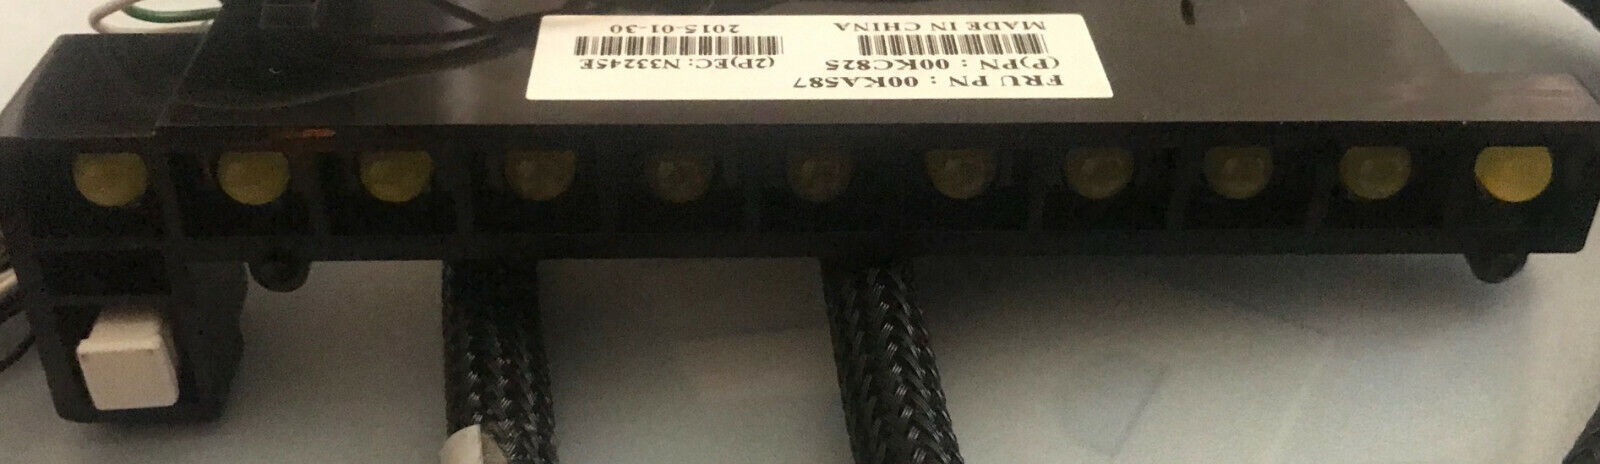 Lenovo System x3500-M4 (Type-7383) Light Path Diagnostics cable PN: 00KA587 